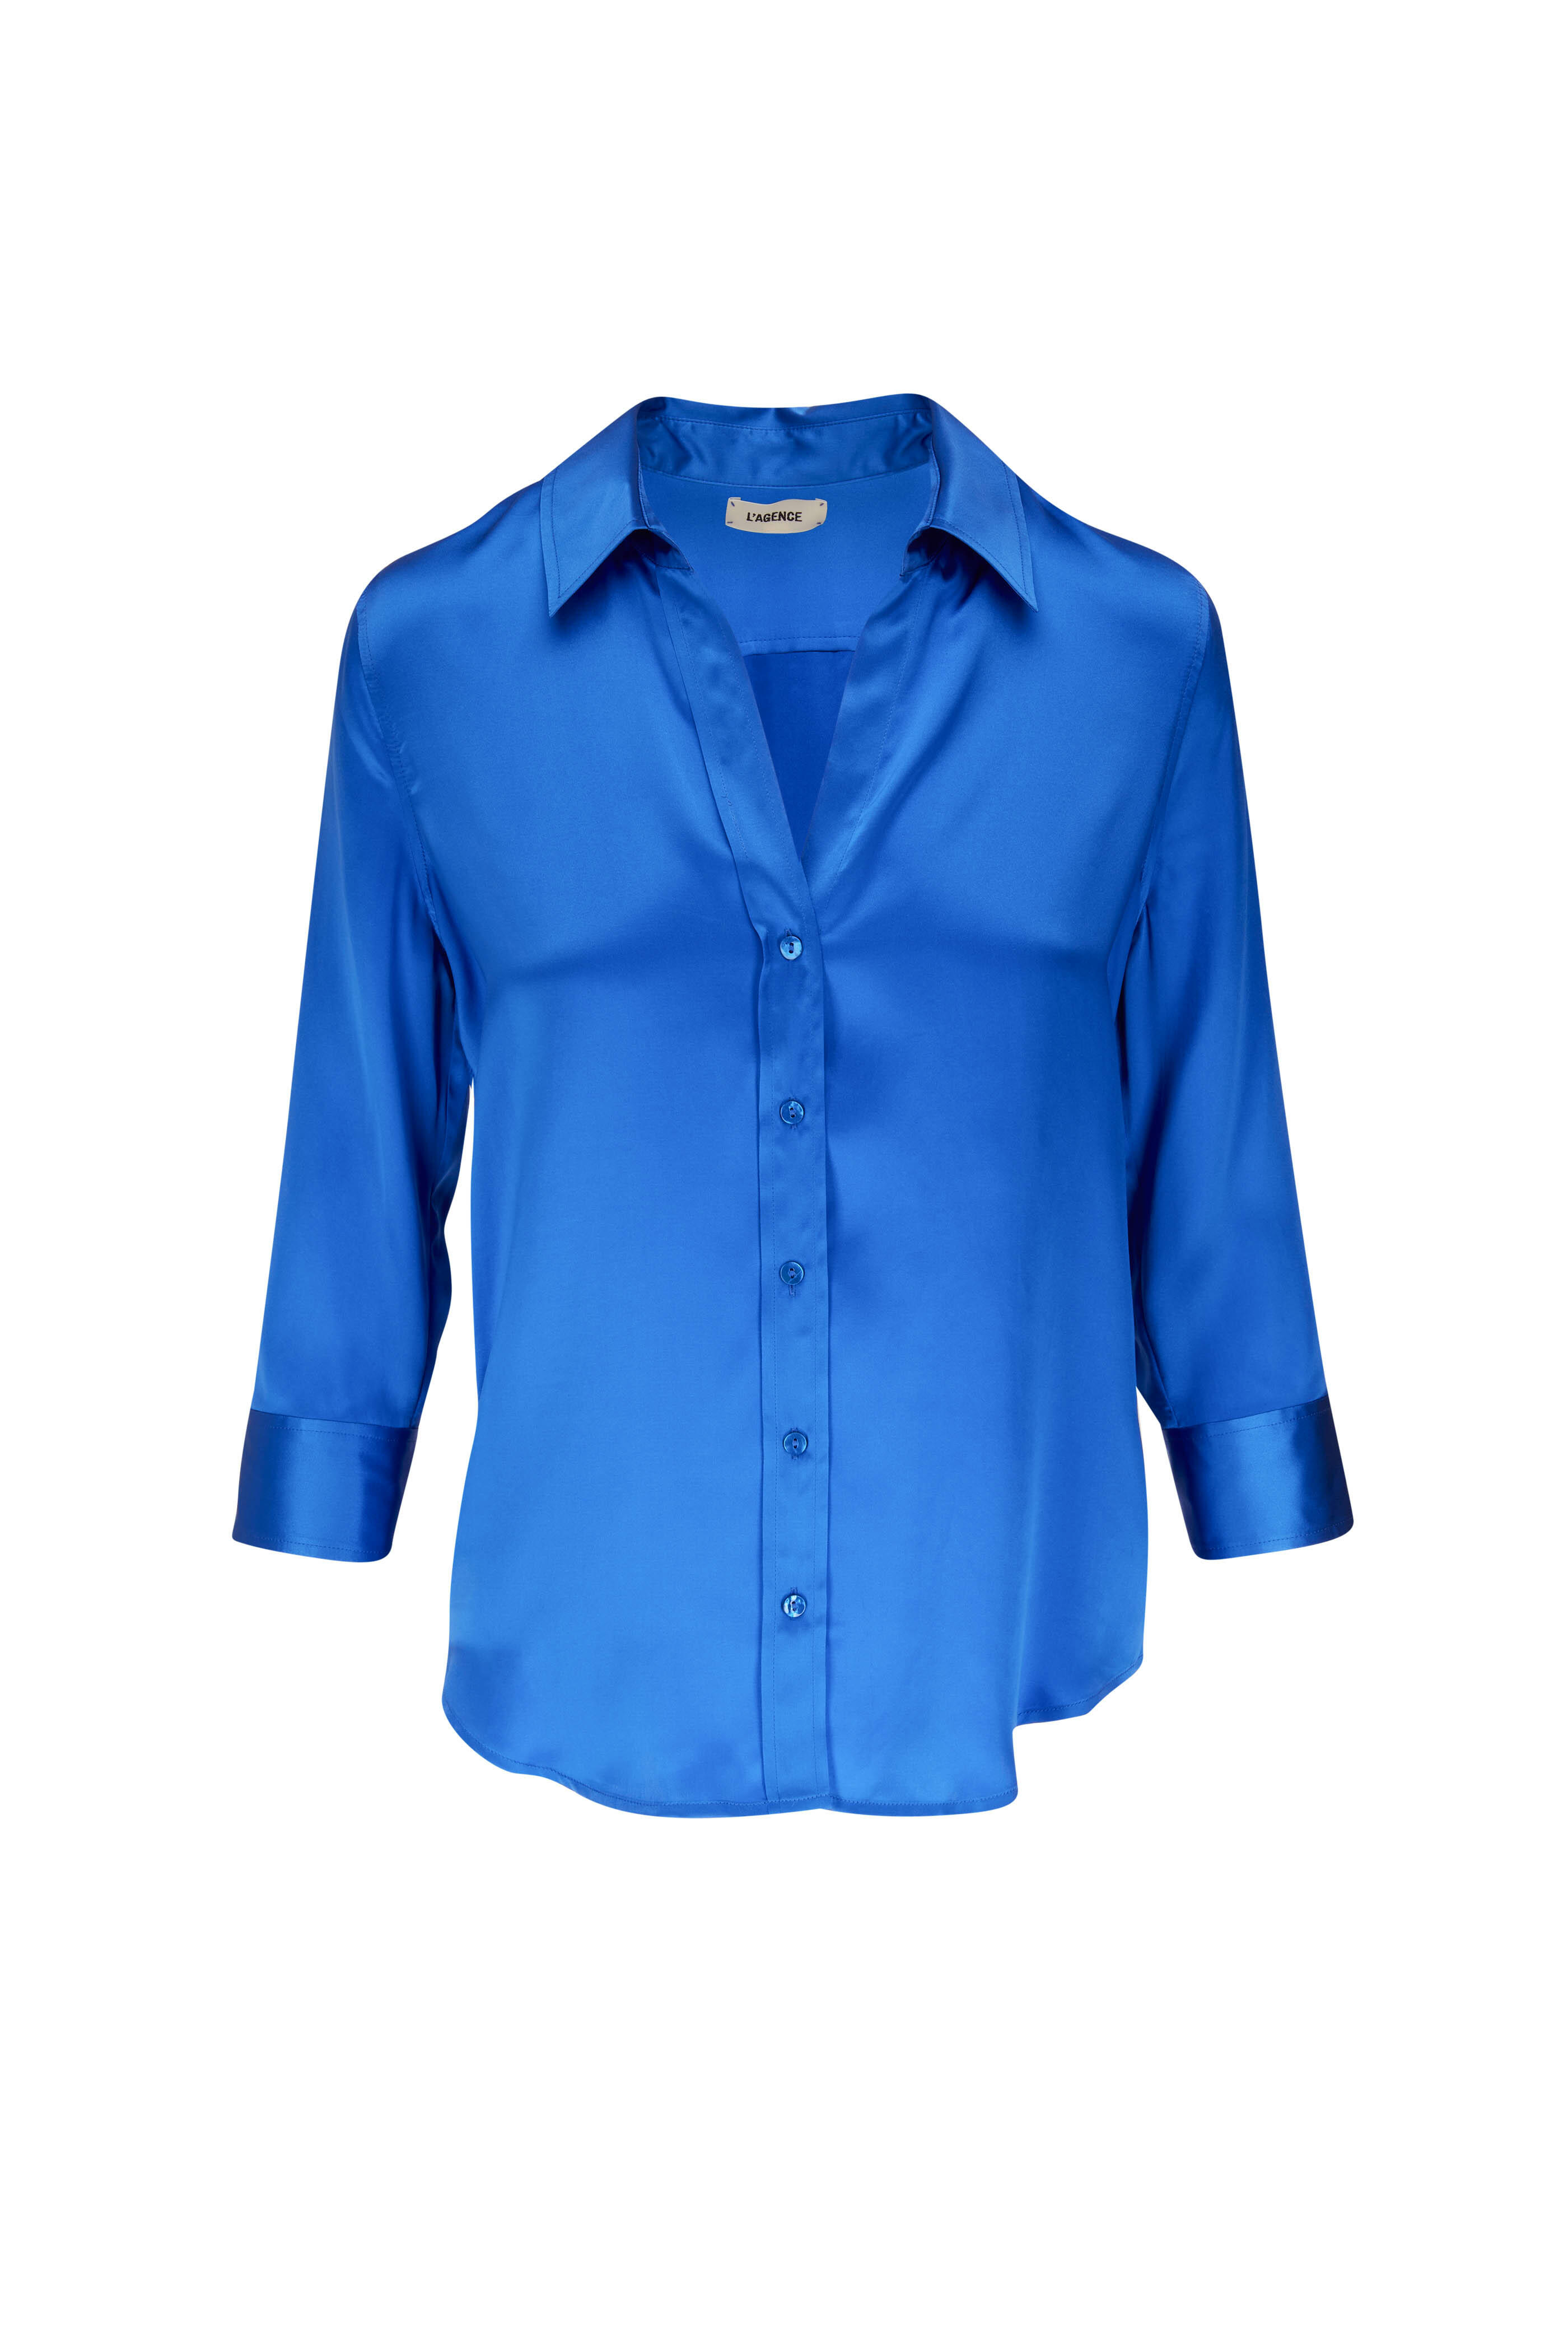 L'Agence - Dani Blue Silk Three-Quarter Sleeve Blouse